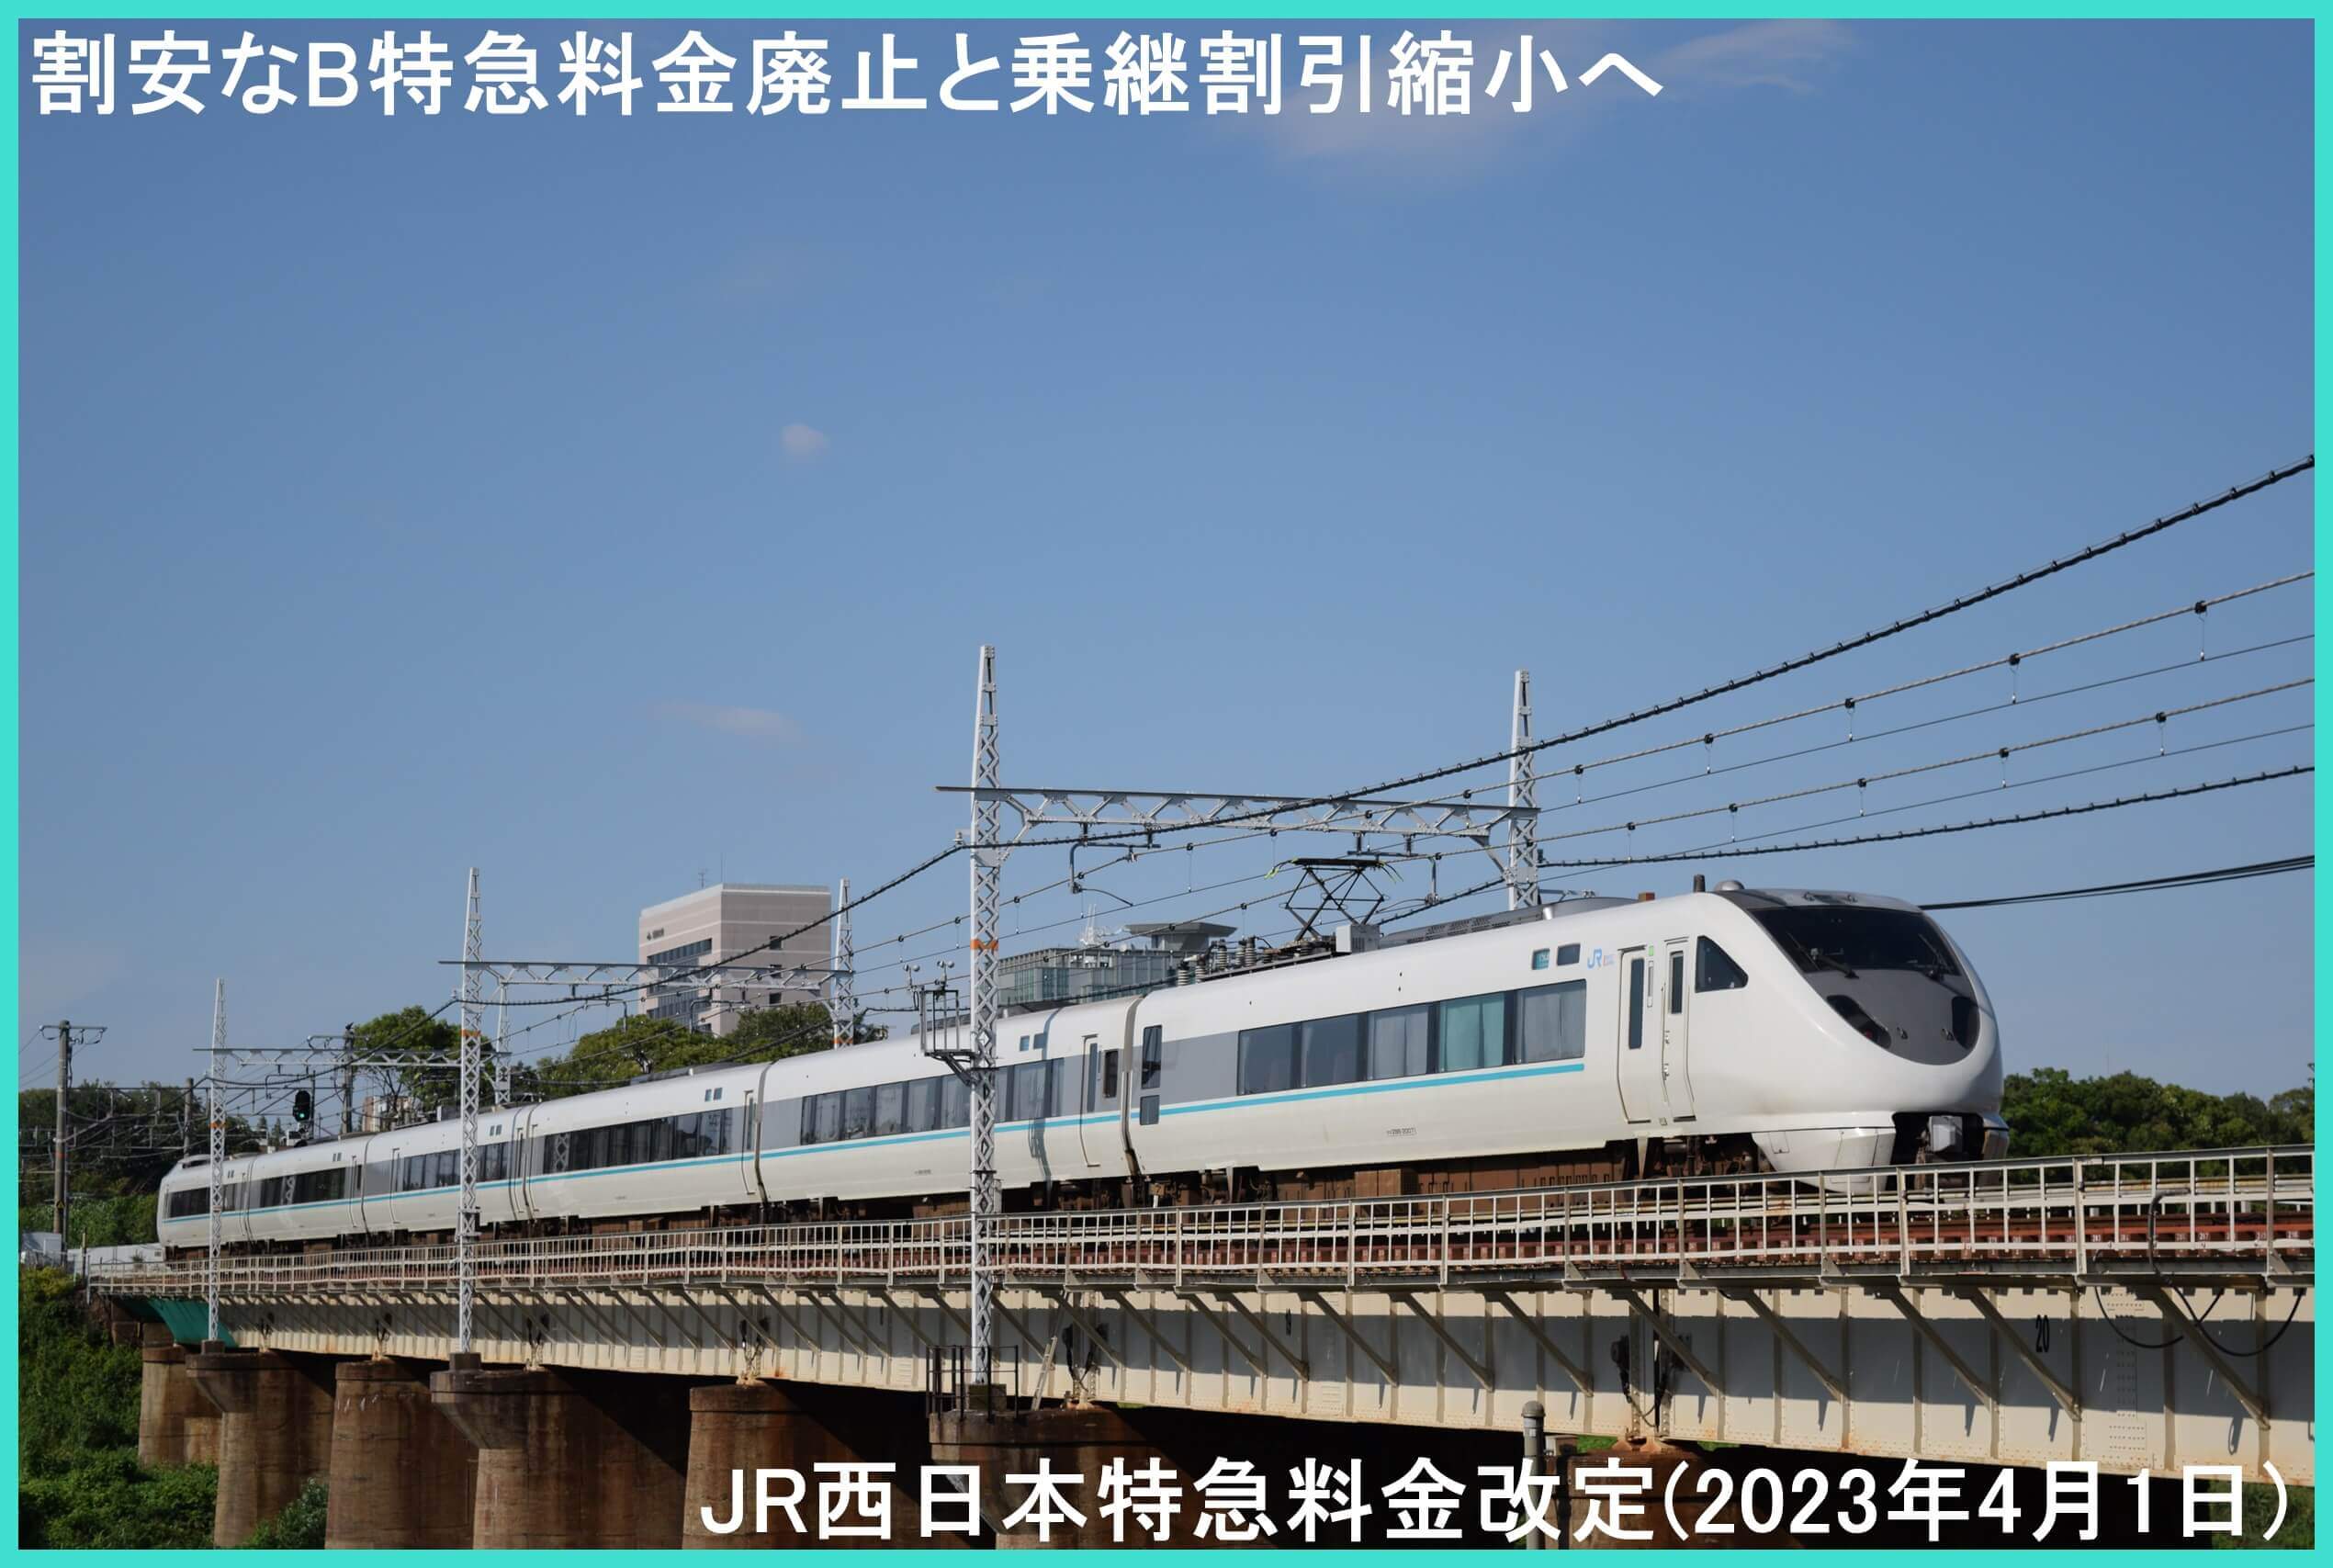 割安なB特急料金廃止と乗継割引縮小へ　JR西日本特急料金改定(2023年4月1日)